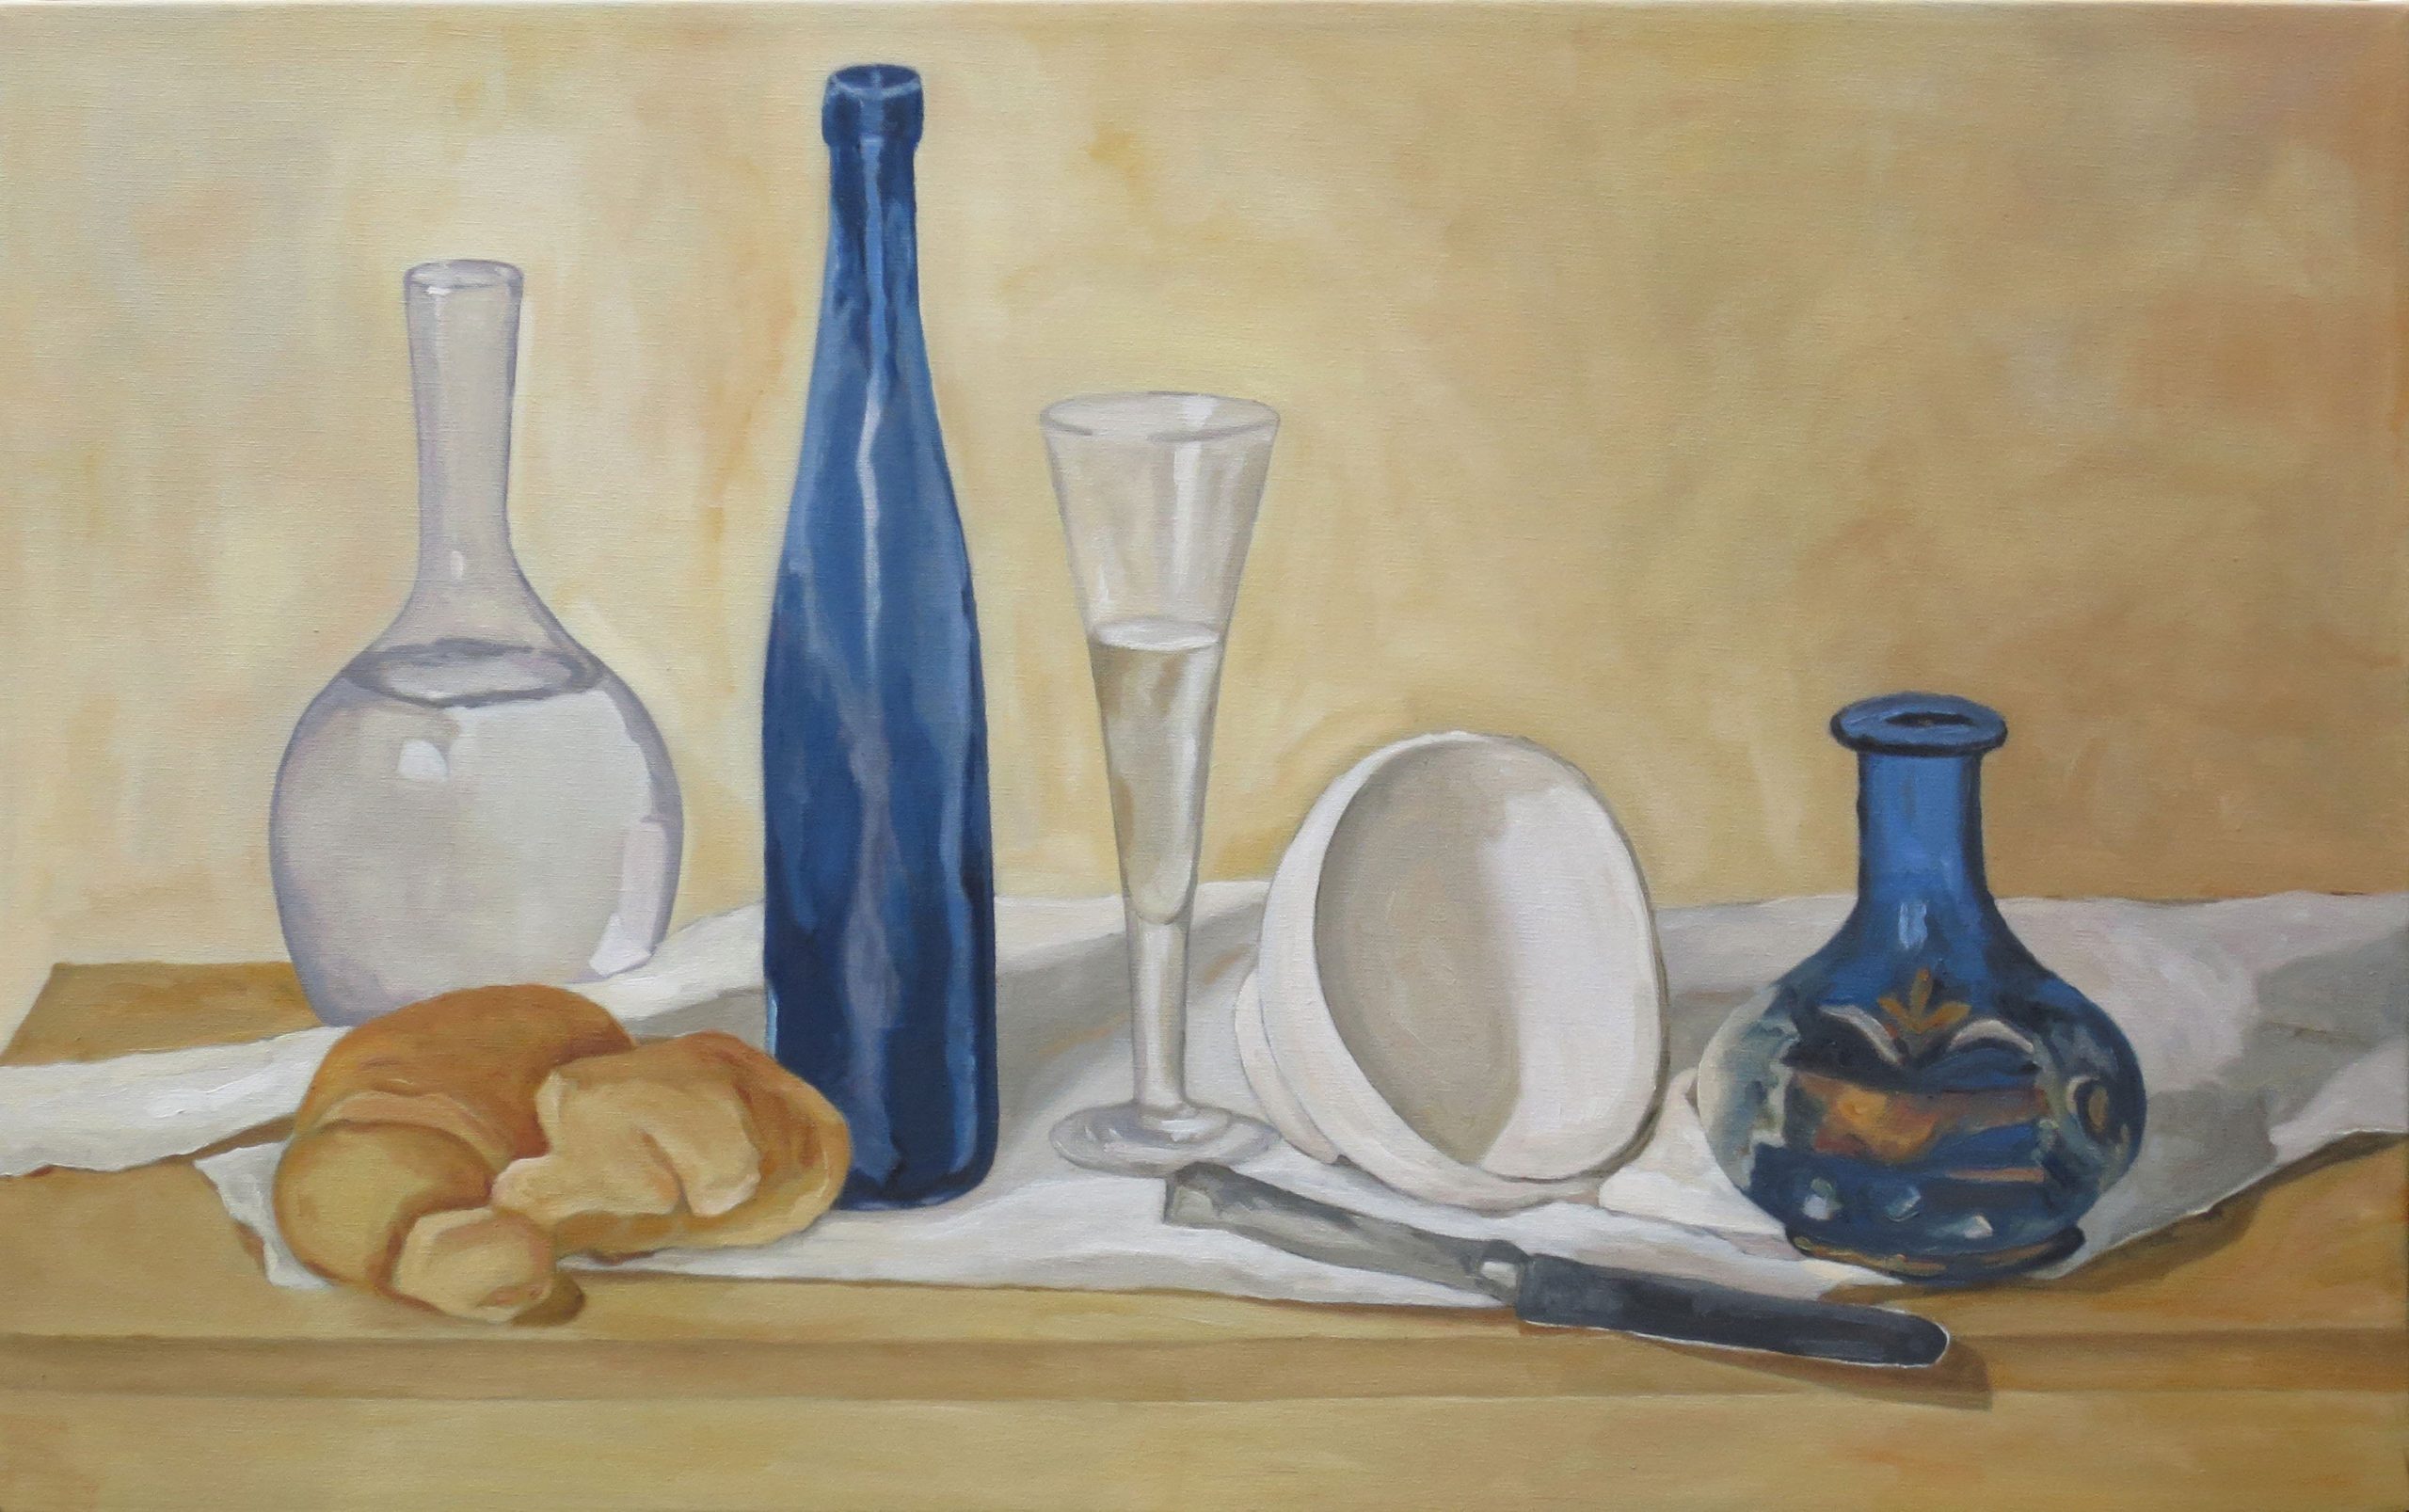 Giorgio Morandi and Reflections on Still Life Painting - Carl Kruse ...